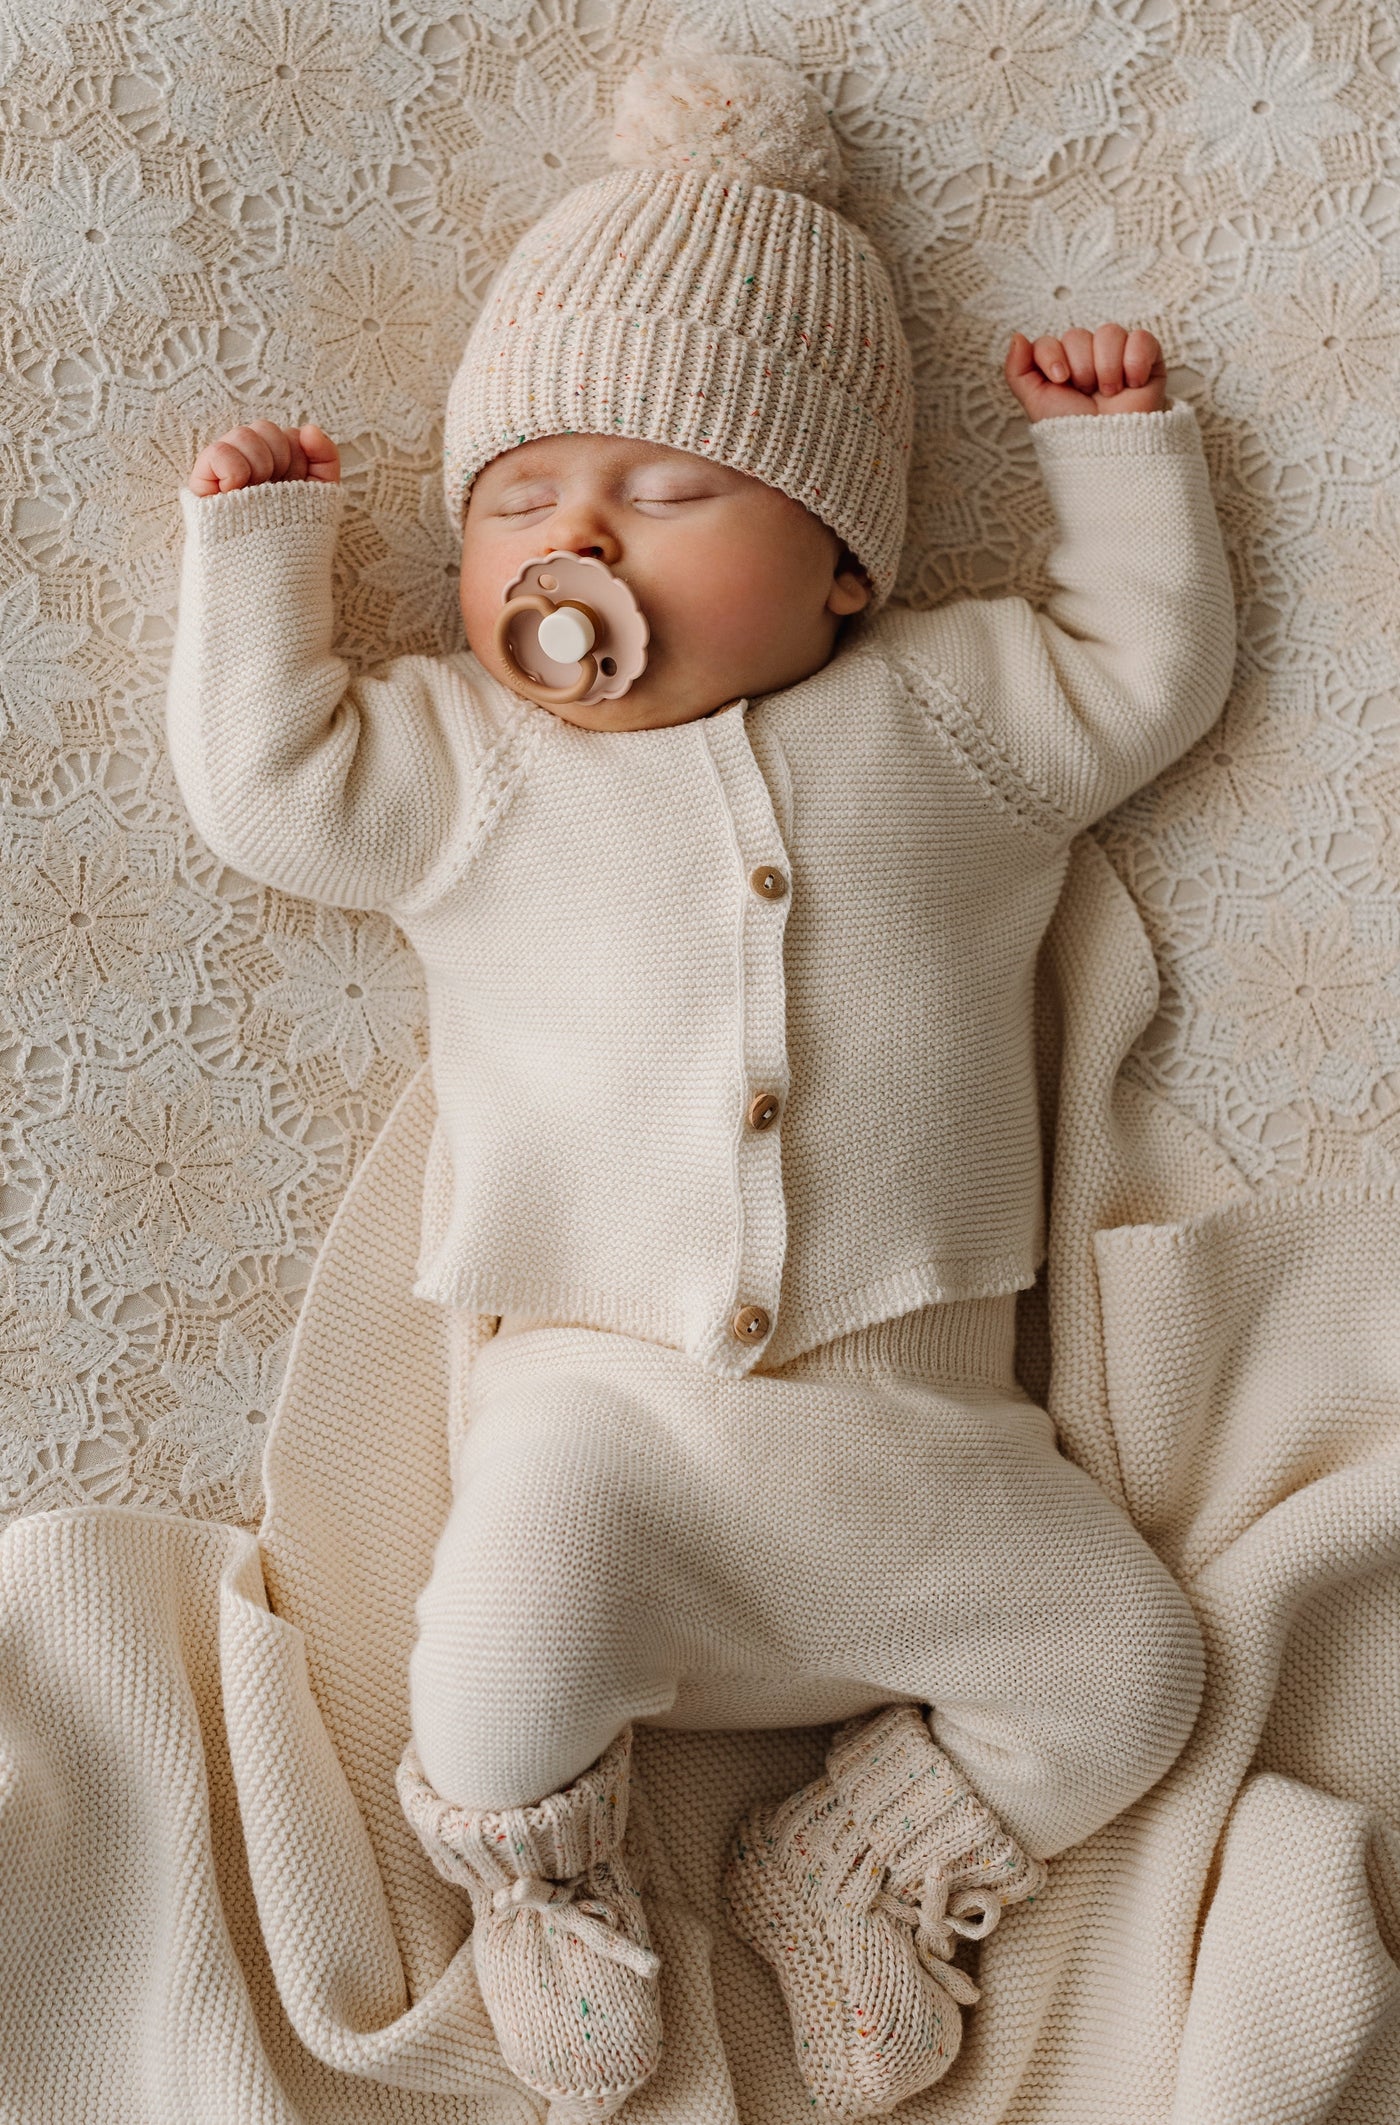 Set Cappello e Scarpine Minimal in Cotone. - Baby Clothes - Baby Rainbow Shop - P.IVA 04847500230